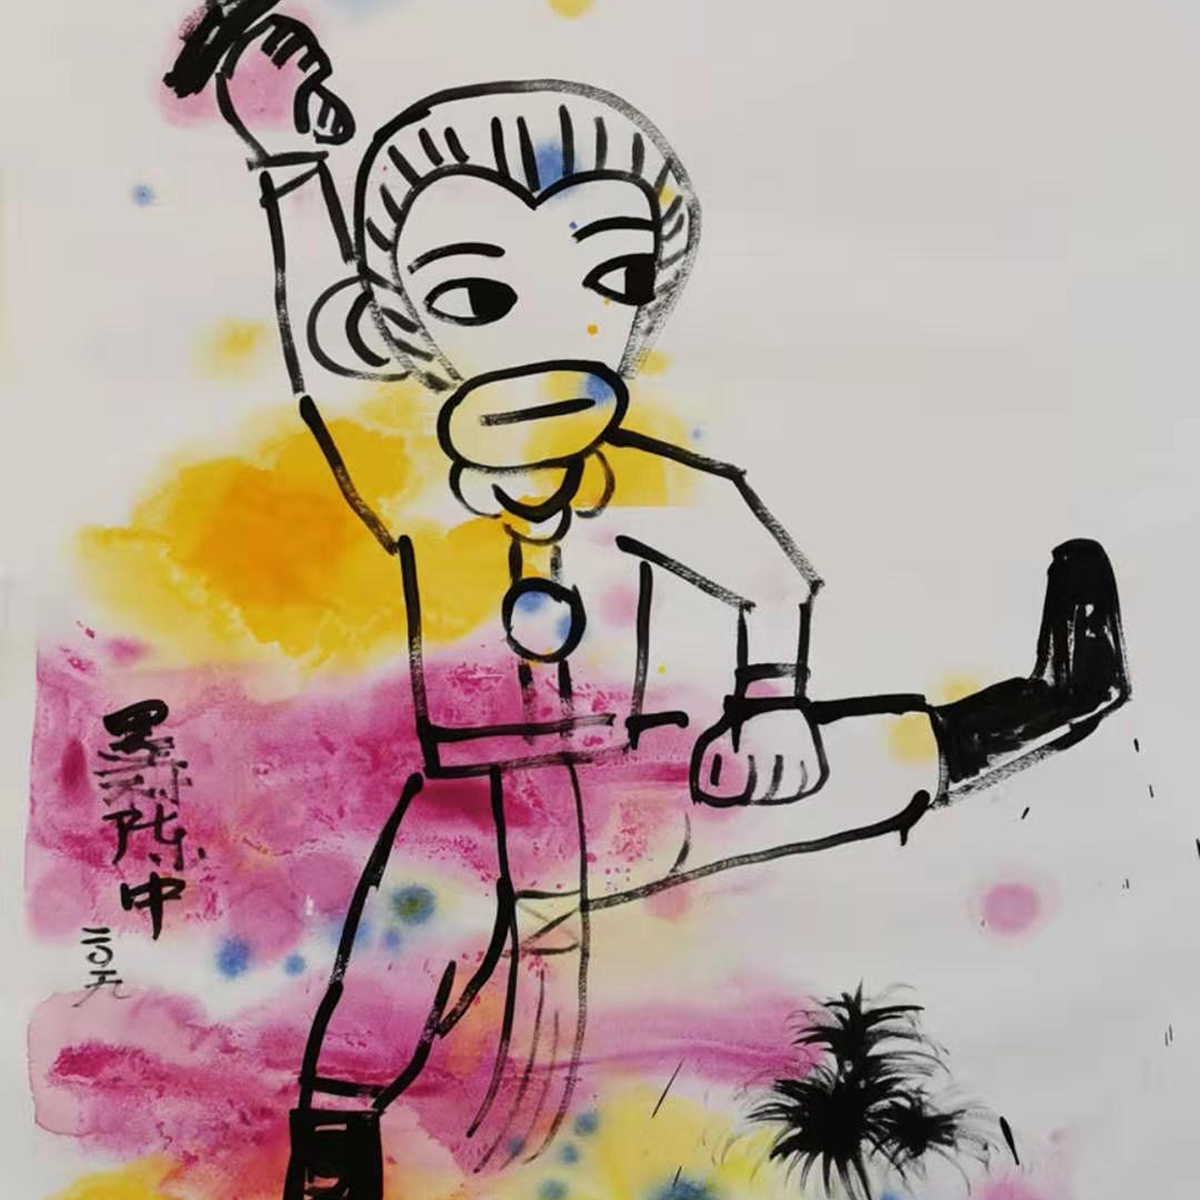 Gong Fu Monkey #1 Mixed Media on Paper 120cmx80cm 2020